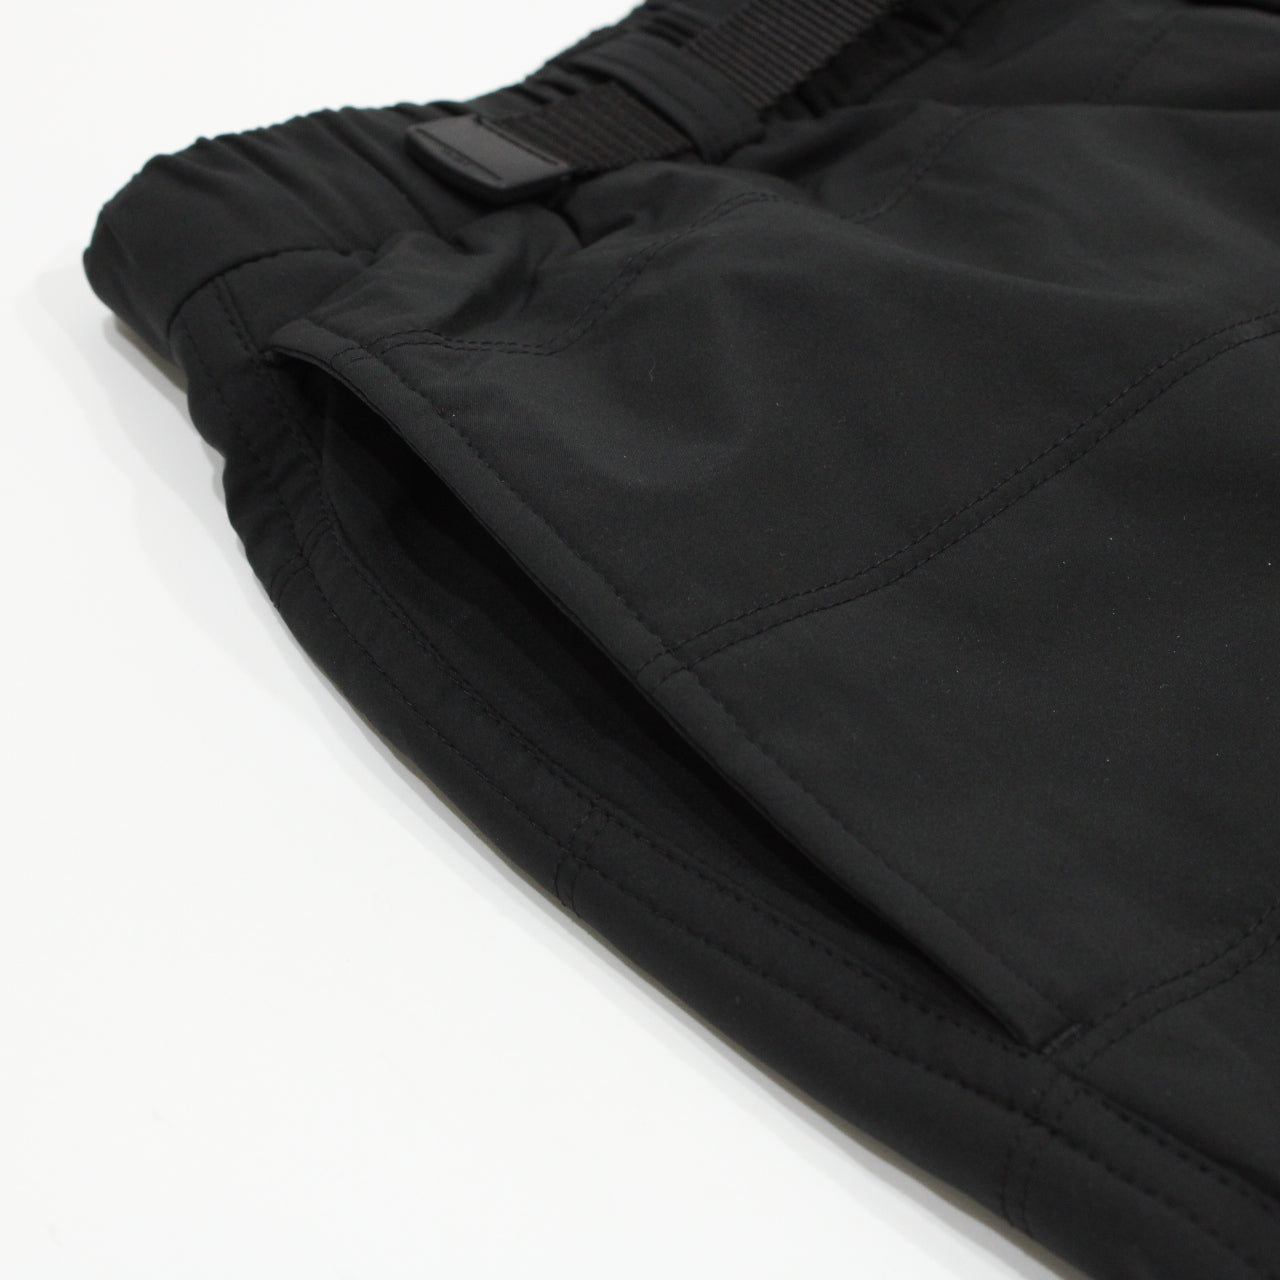 Flexible Insulated Pants 1 Black